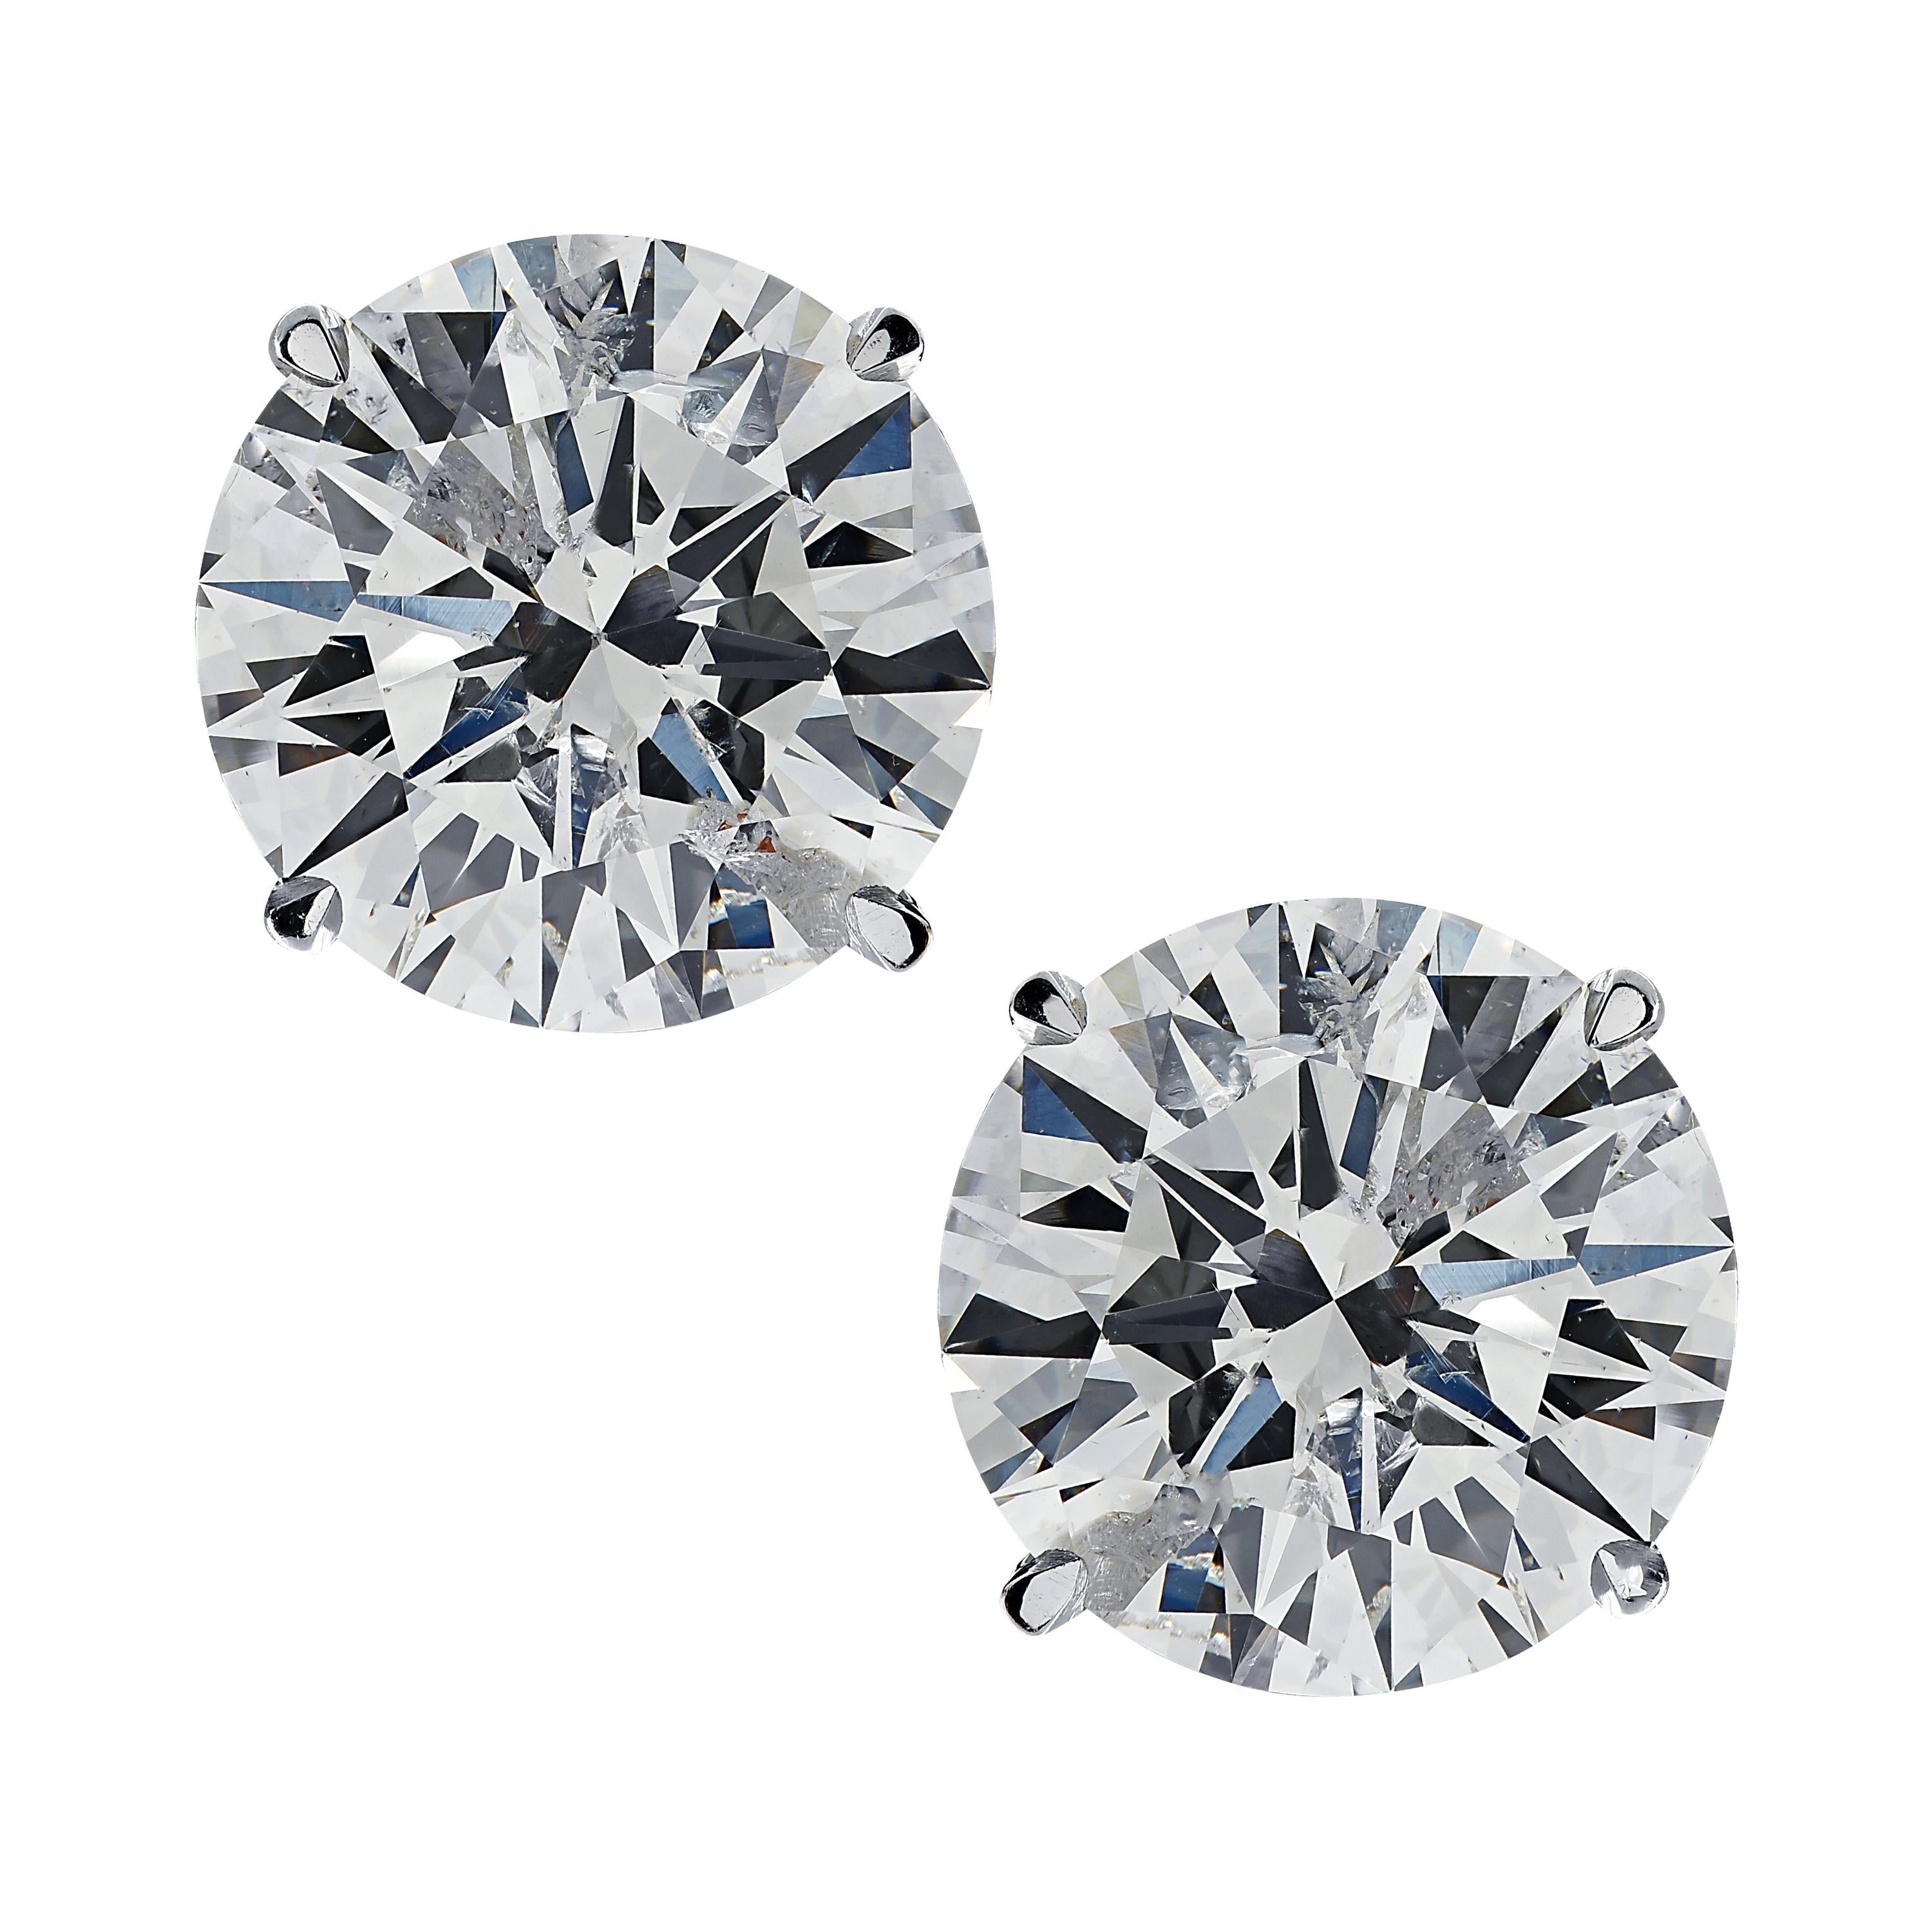 Vivid Diamonds 4.44 Carat Diamond Solitaire Stud Earrings